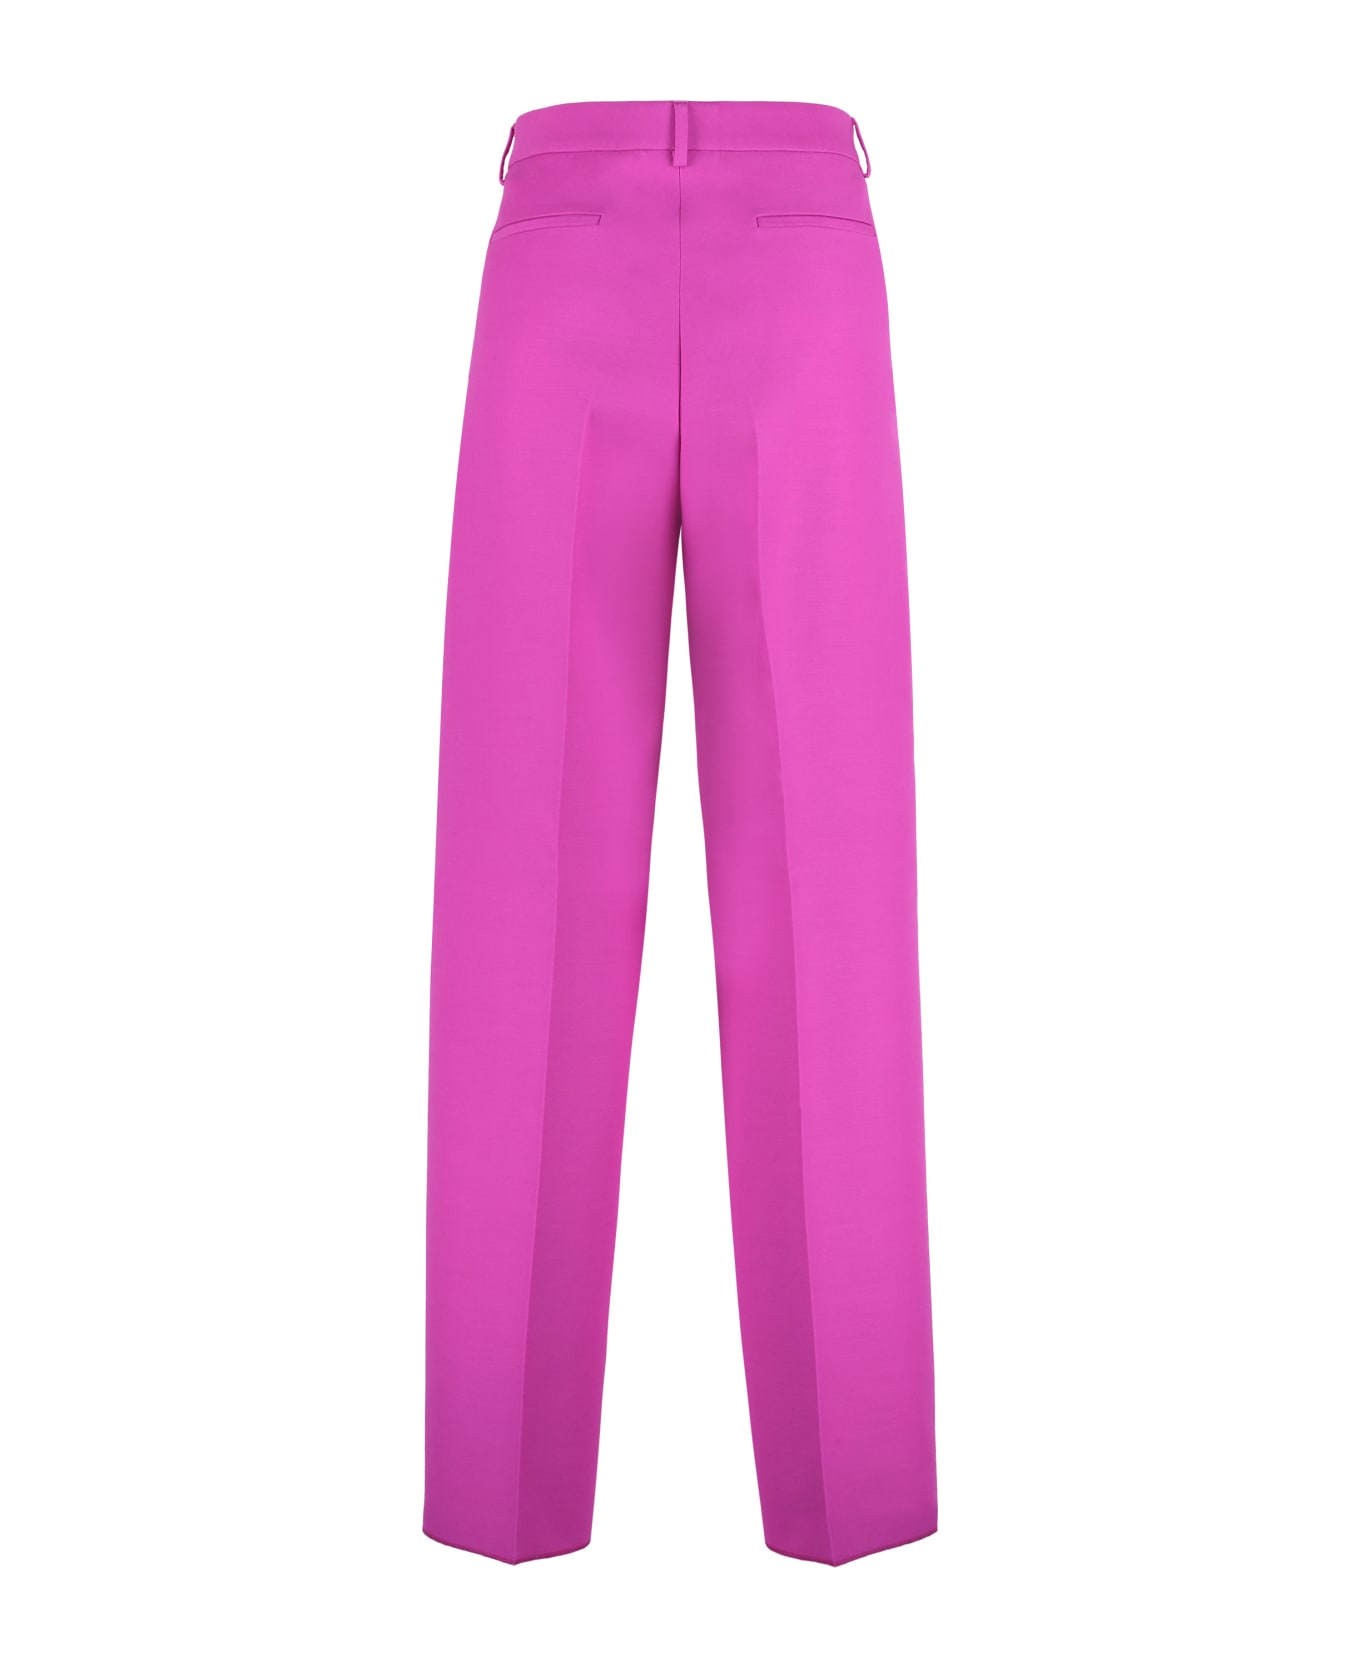 Valentino Garavani Tailored Wool Trousers - Pp pink